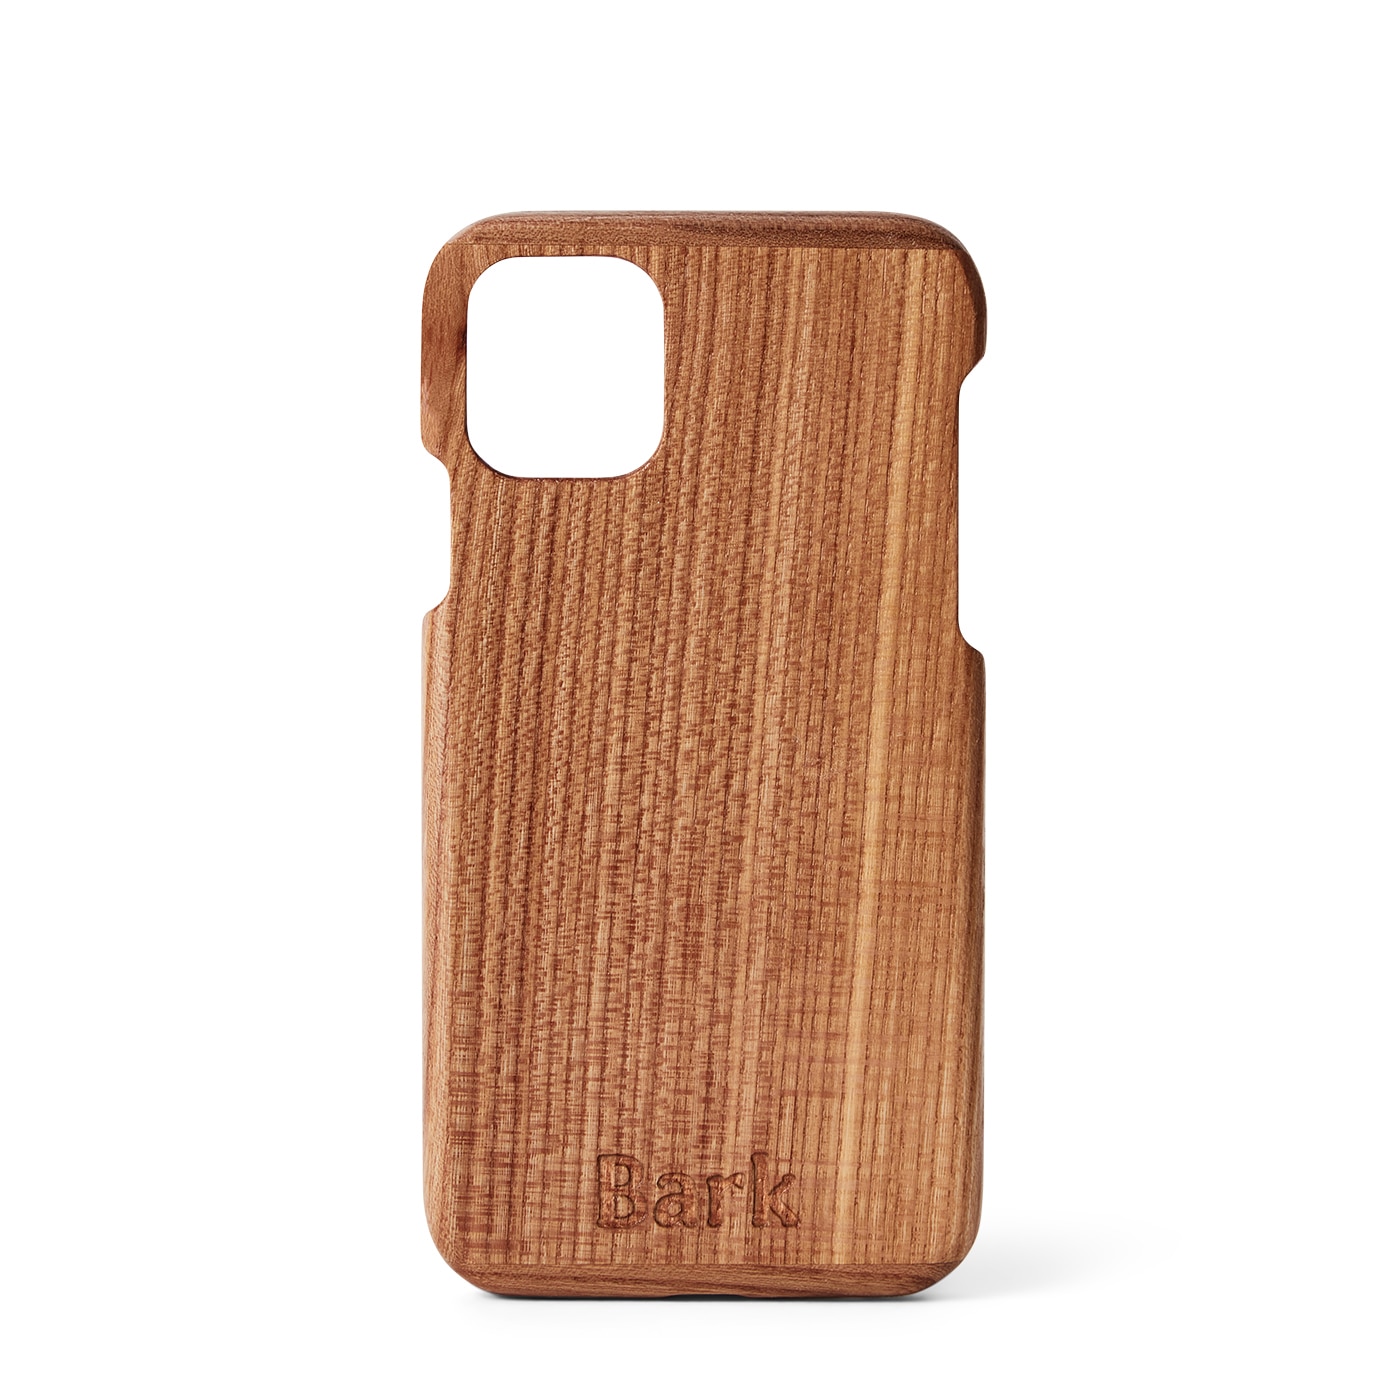 iPhone 11 custodia in legno di latifoglia svedese - Alm